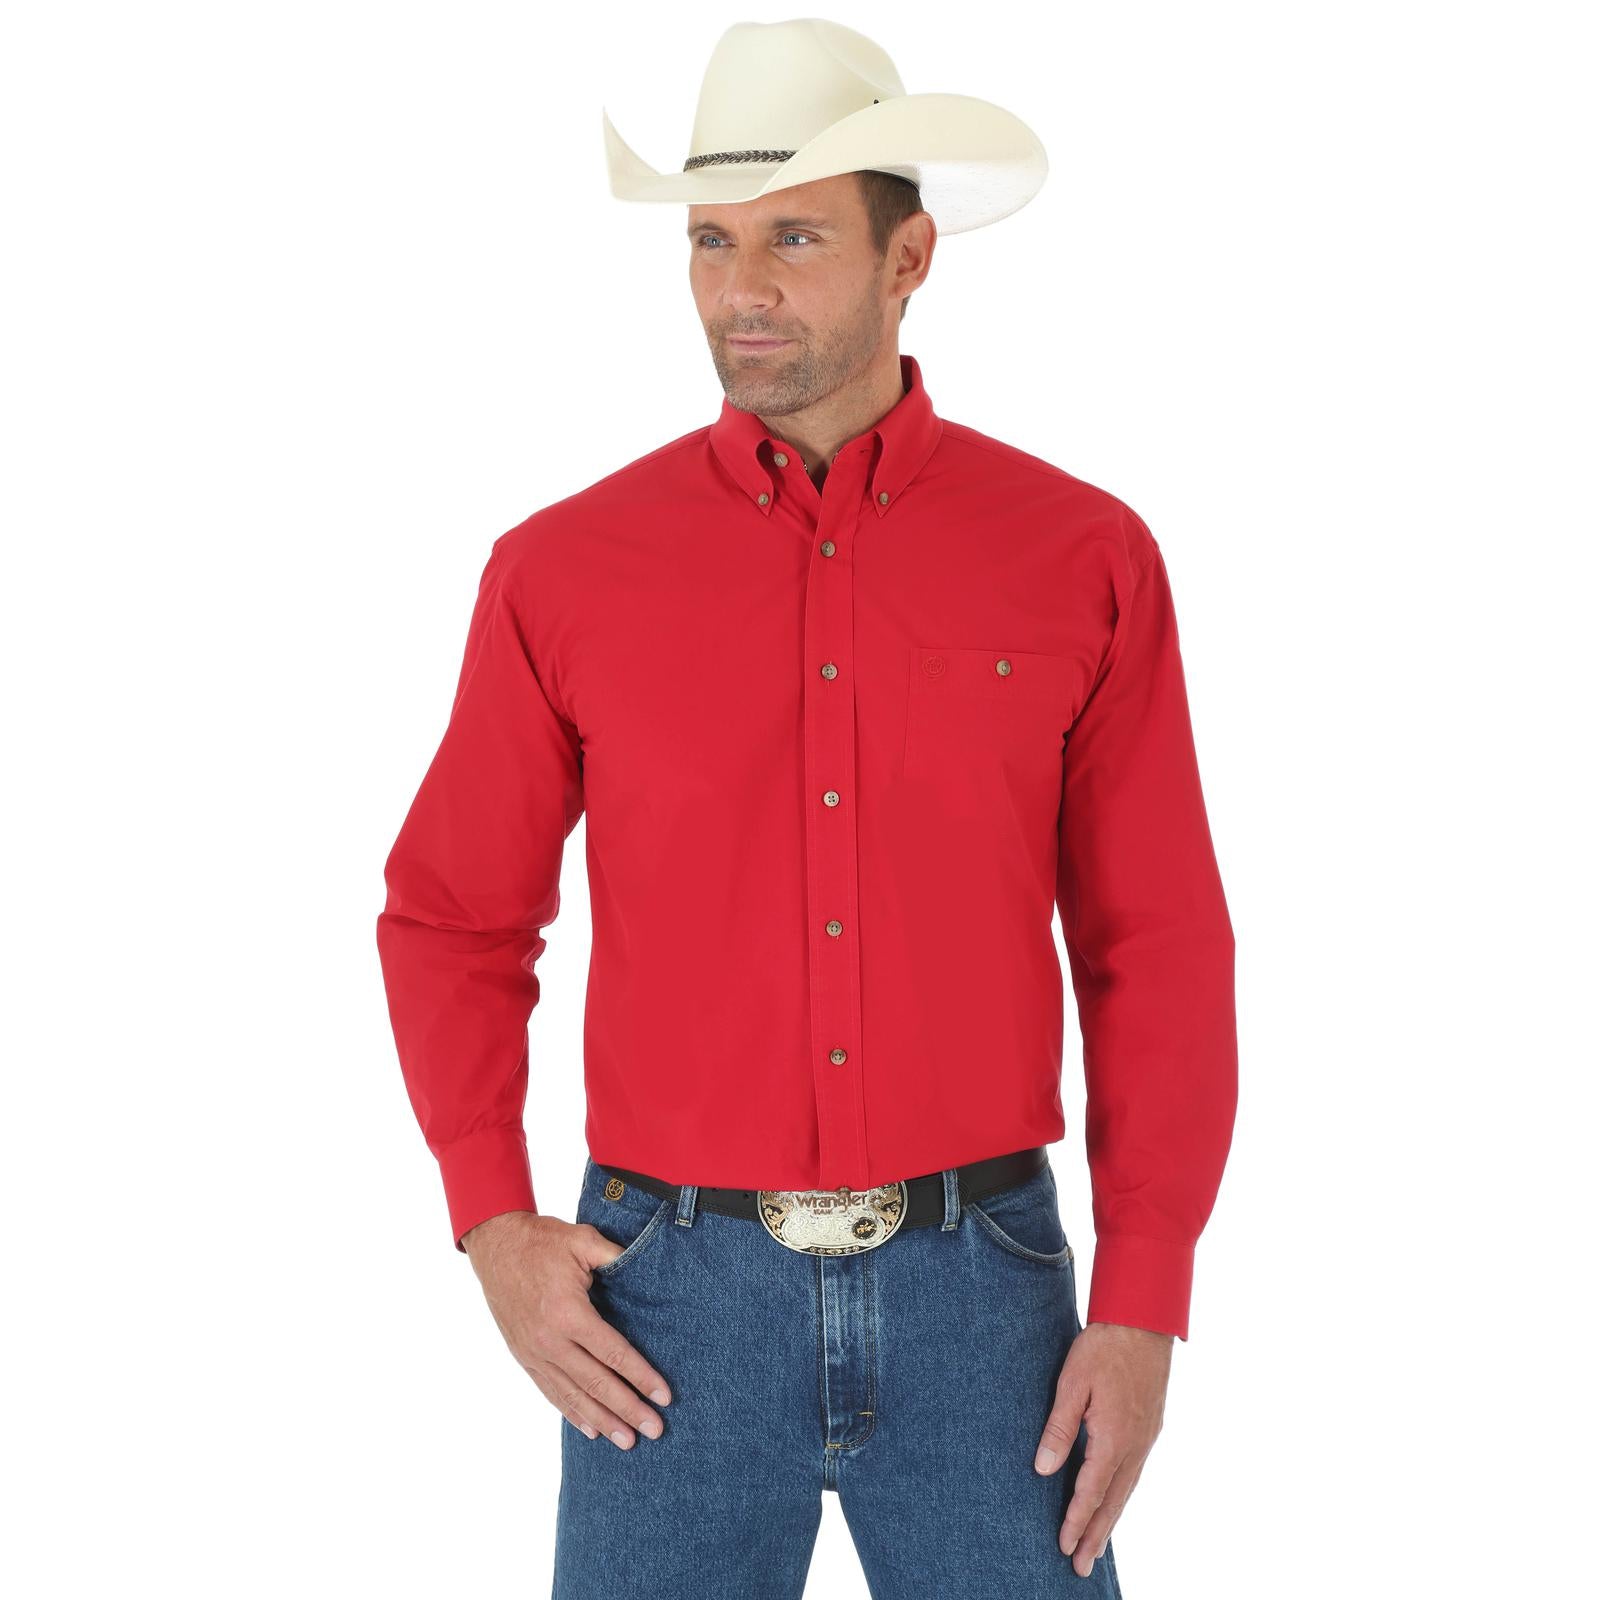 Wrangler Men's George Strait Long Sleeve Shirt STYLE MGS274R